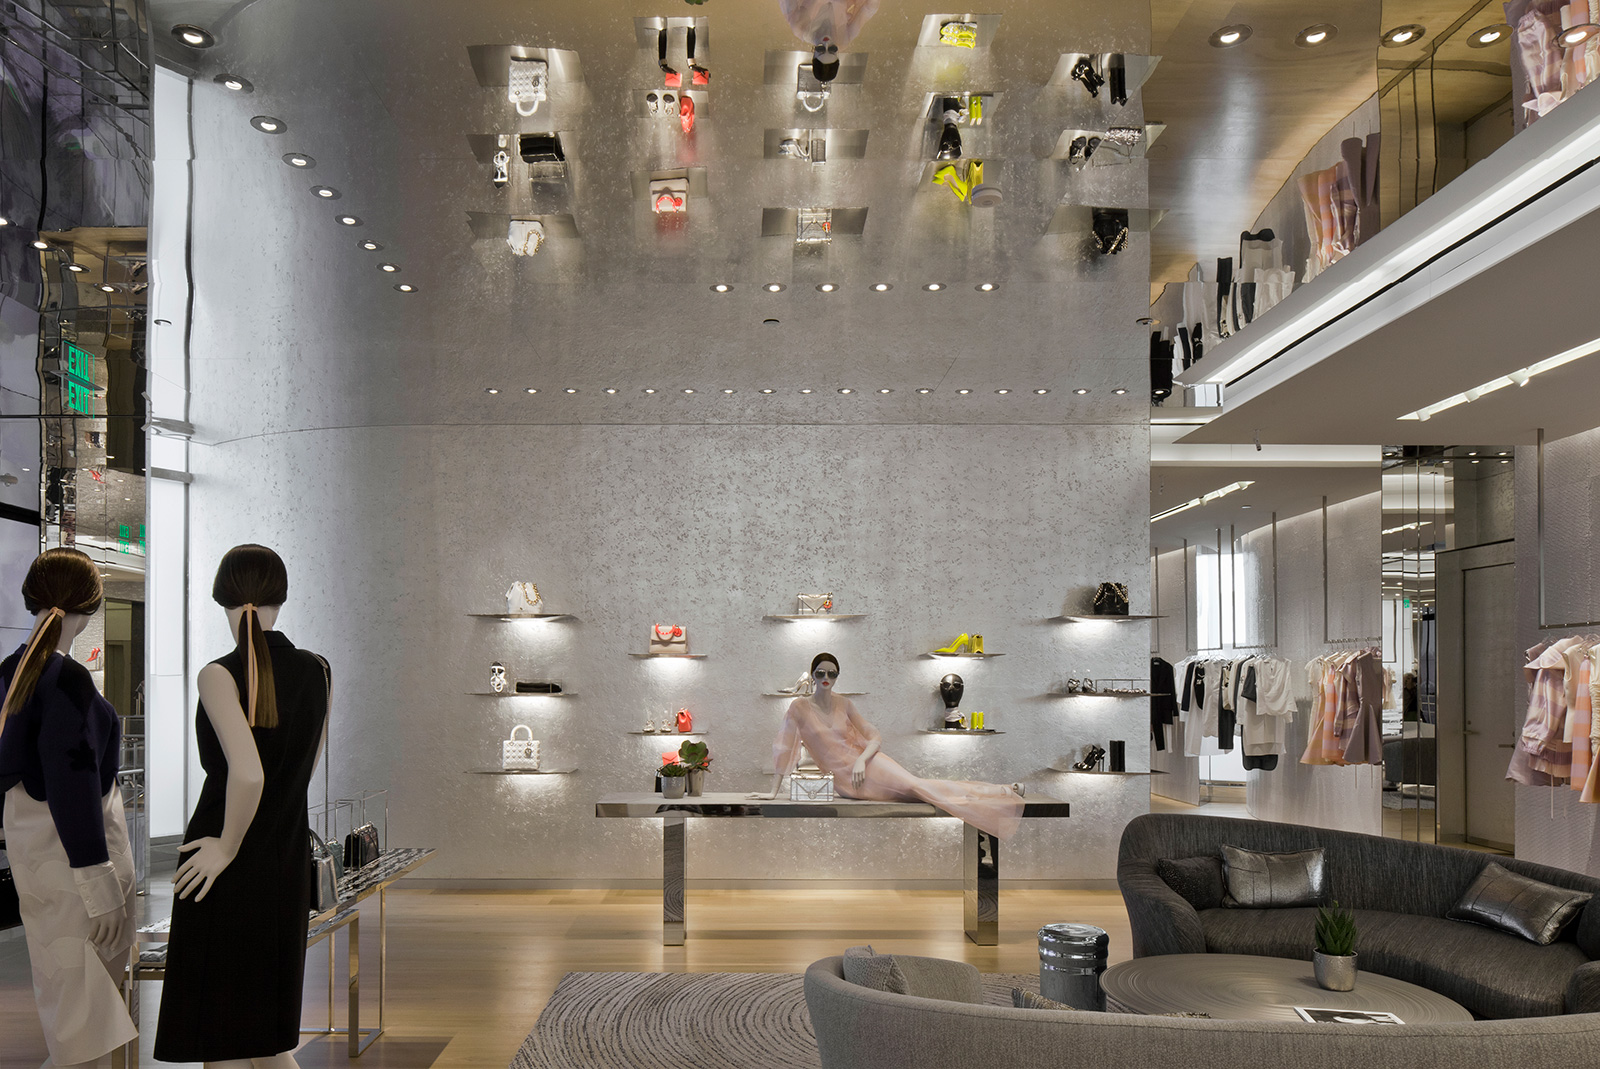 Miami Dior boutique by Barbarito Bancel has pleats